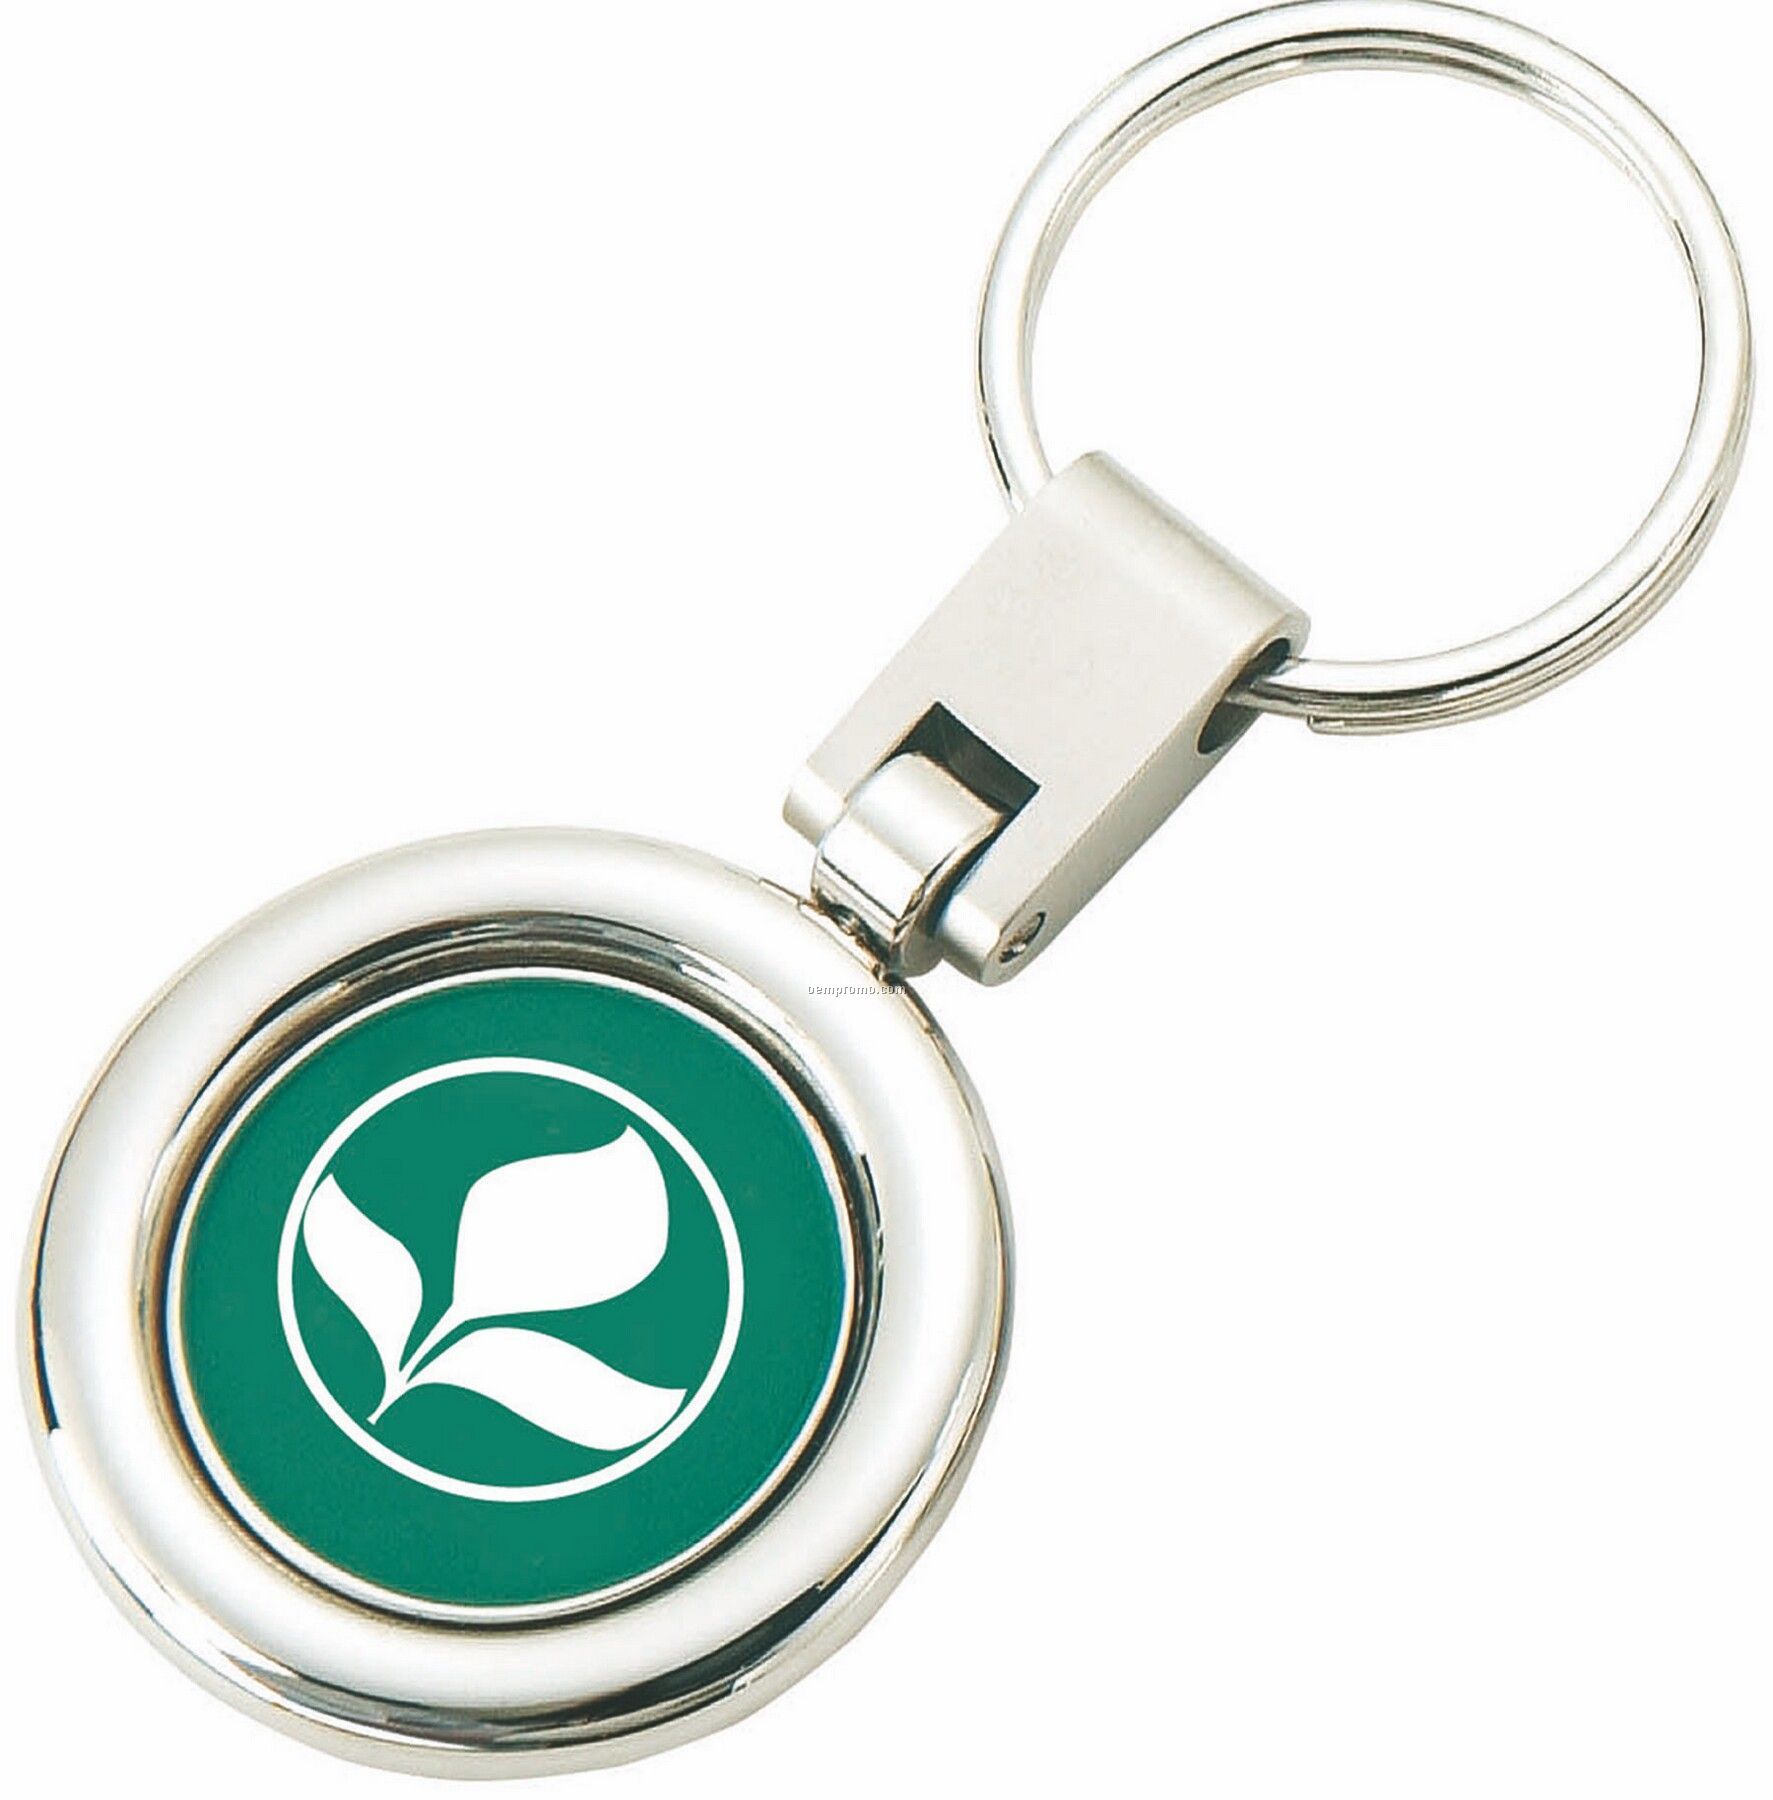 Swivel Round Shiny Nickel Key Ring With Green Enamel Etched Logo